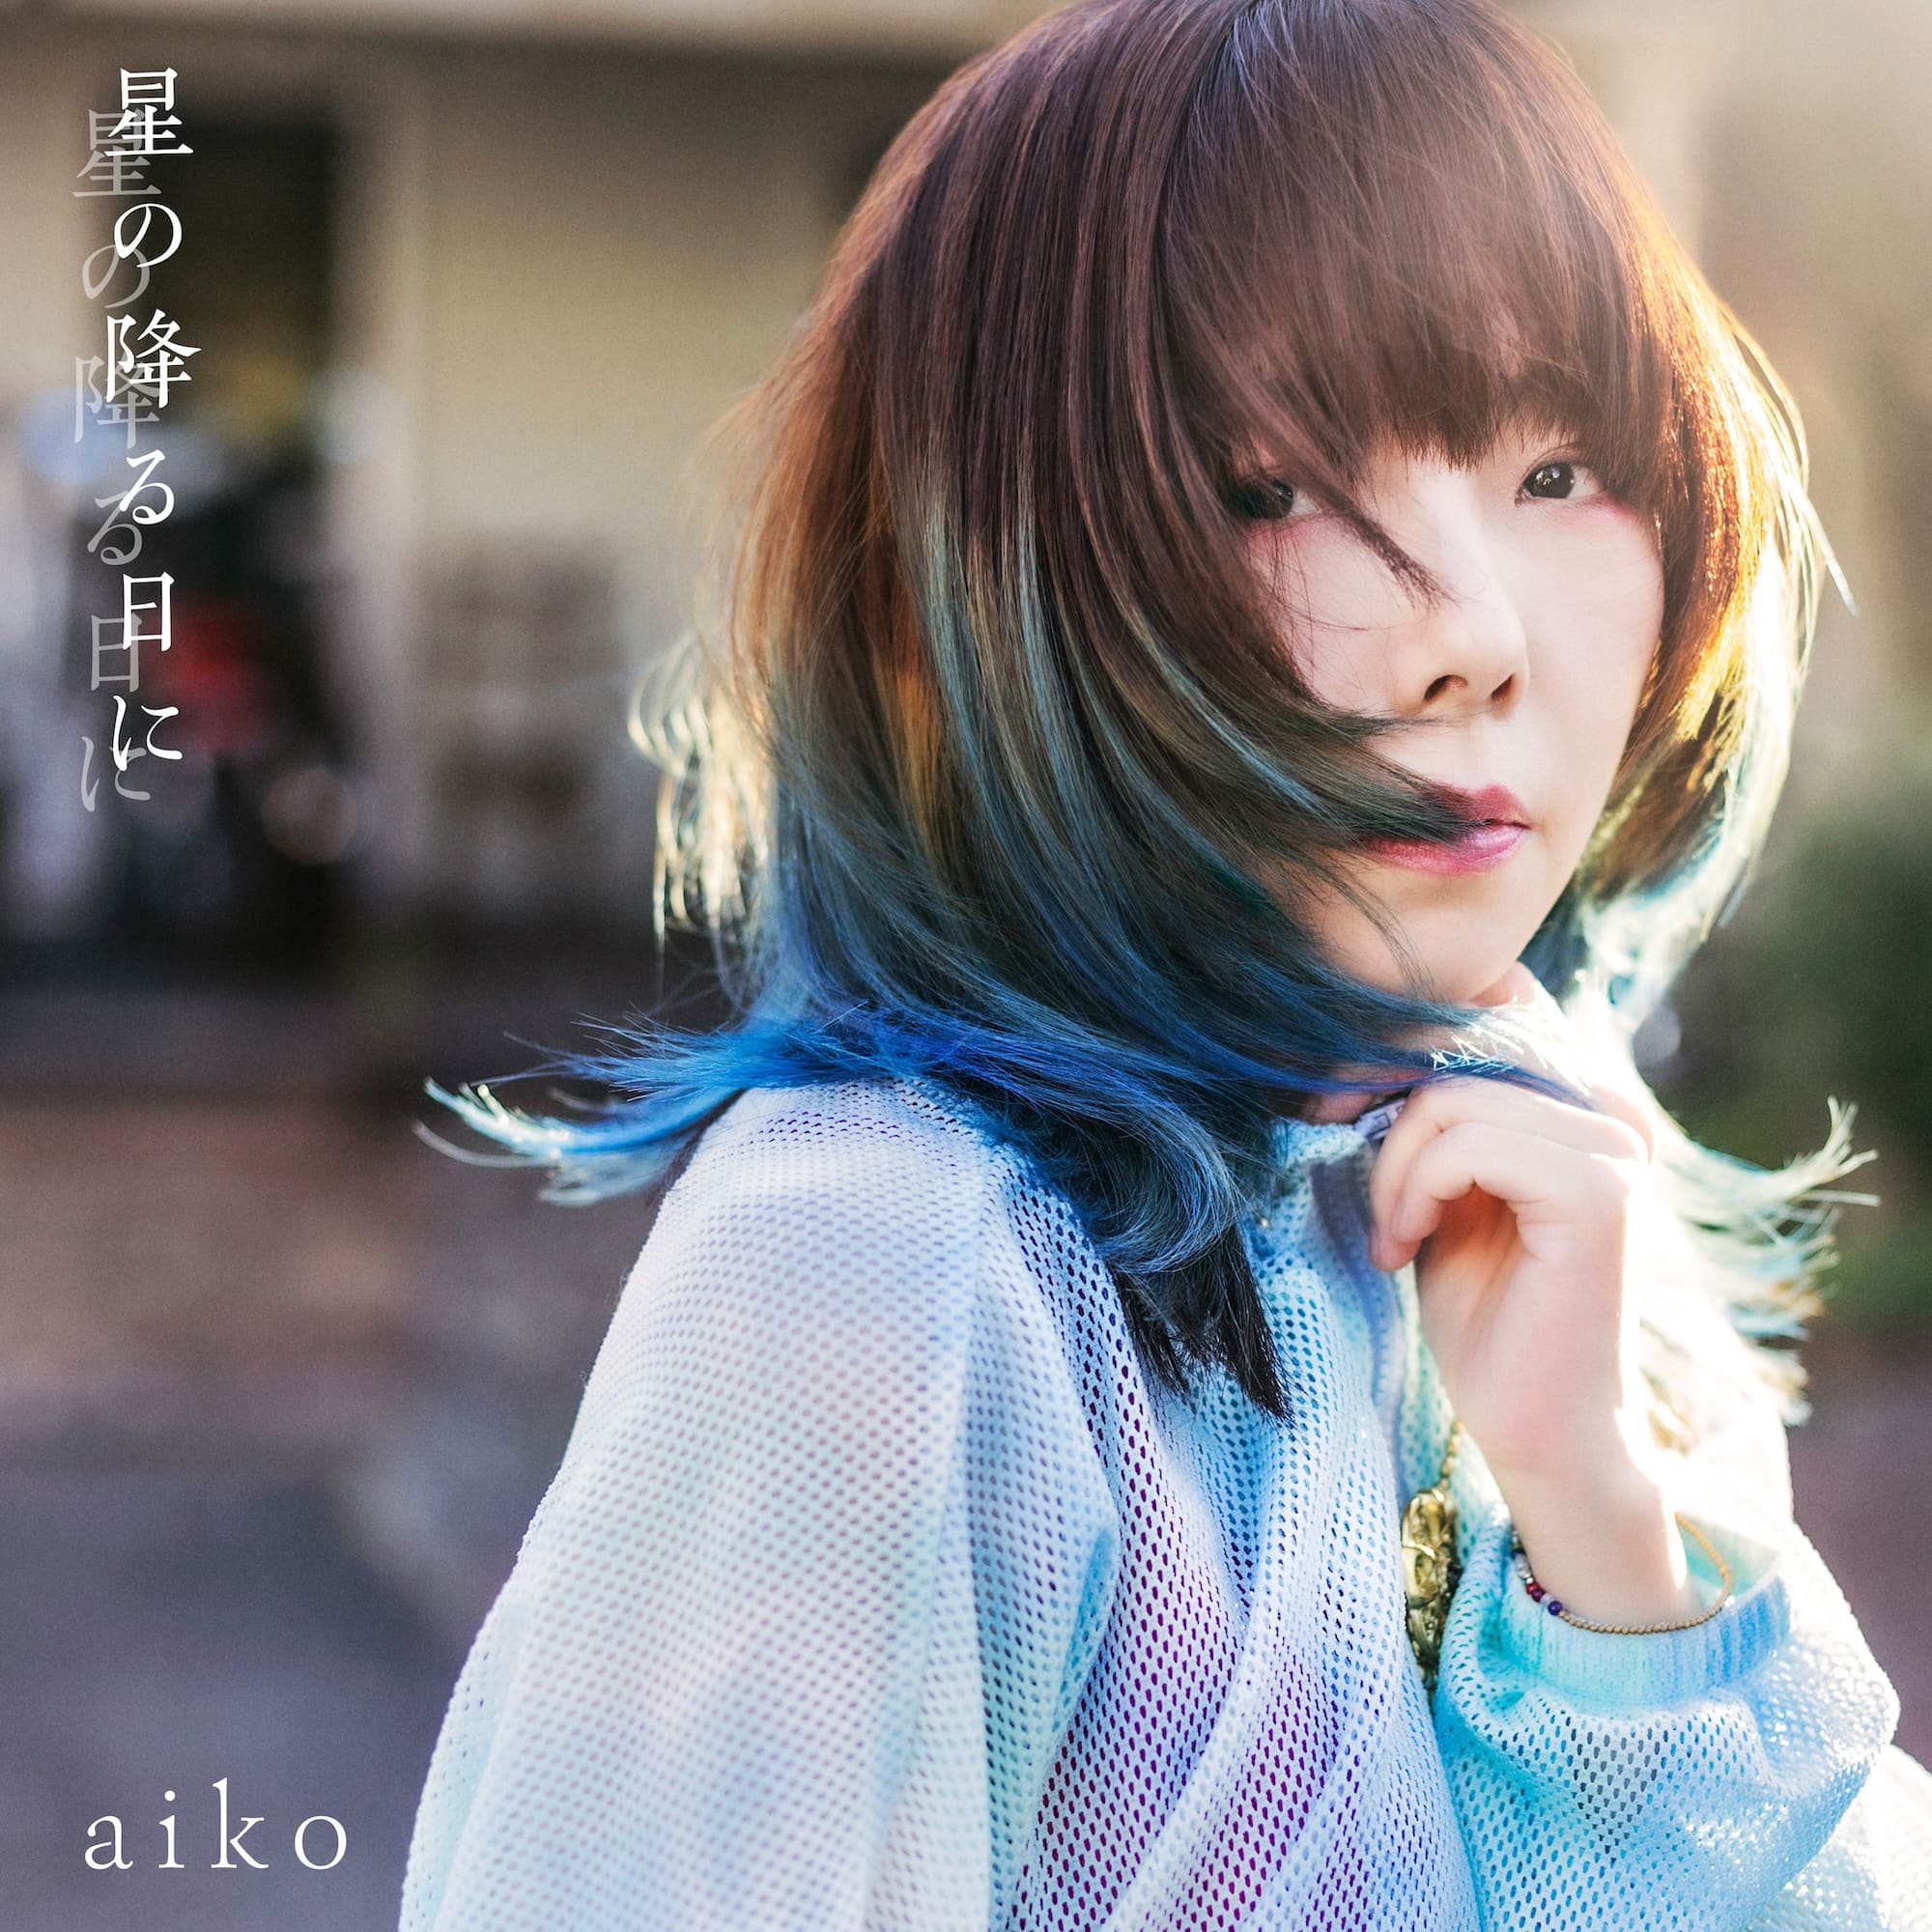 aiko、11月22日発売のニューシングル表題曲「星の降る日に」のMV Teaserを公開！さらに、11月22日22時よりMusic Videoをaiko Official YouTube Channelにてプレミア公開！